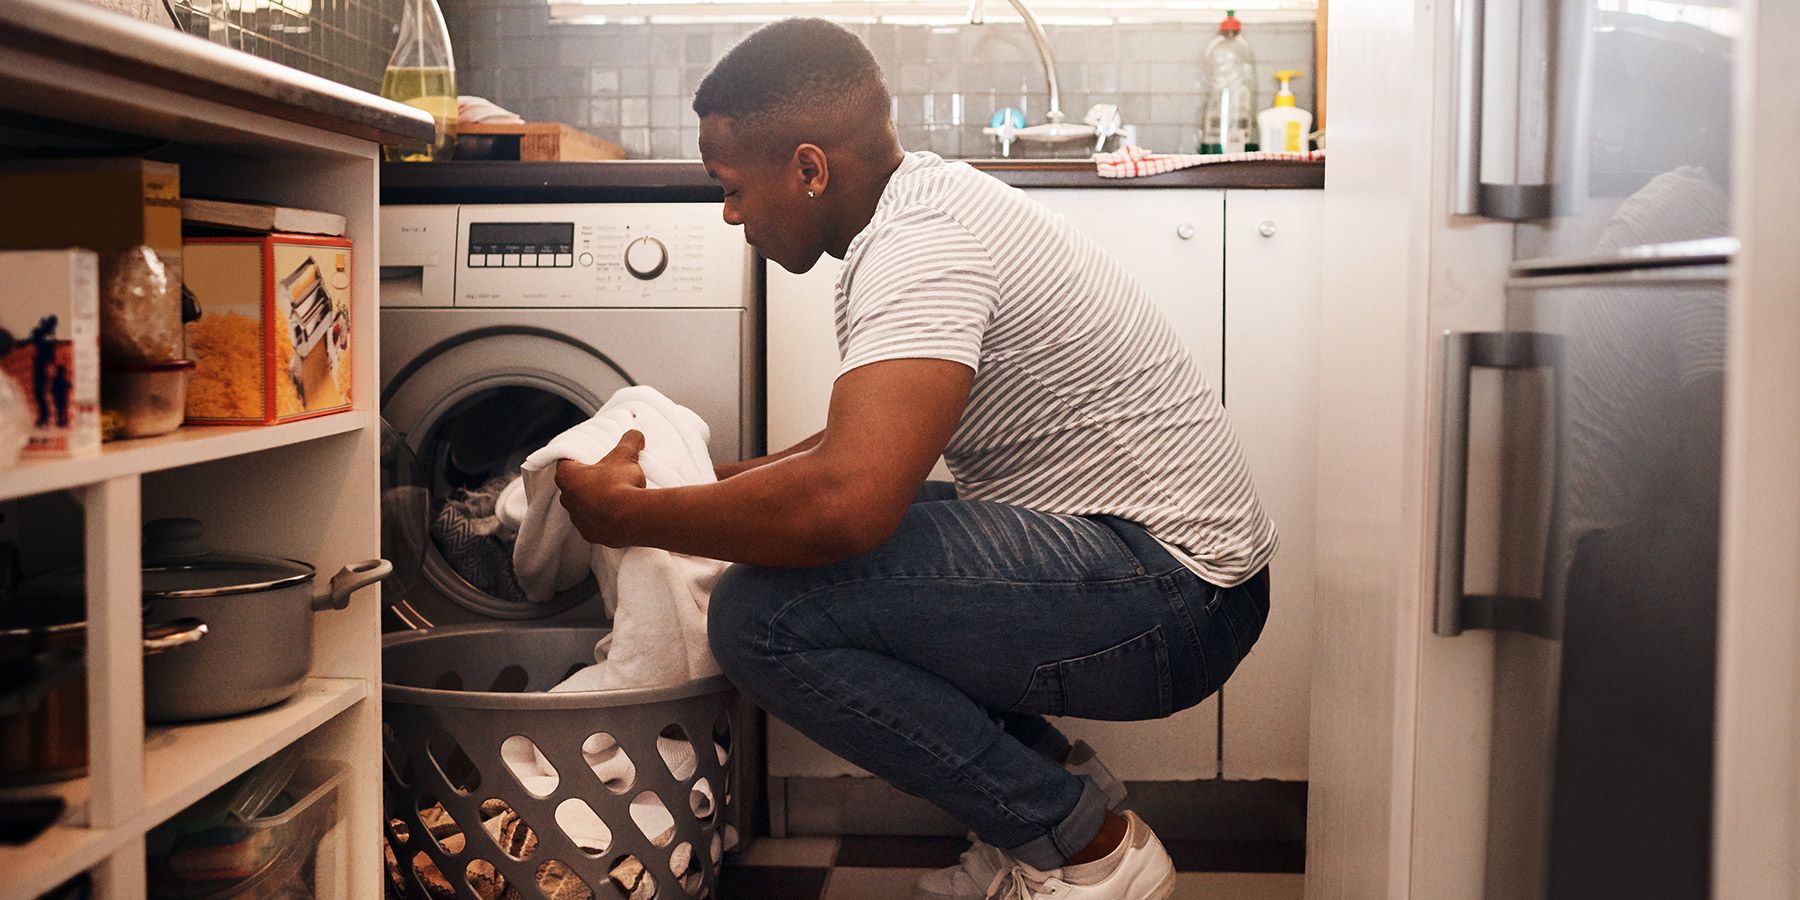 Person kneeling next to laundry machine